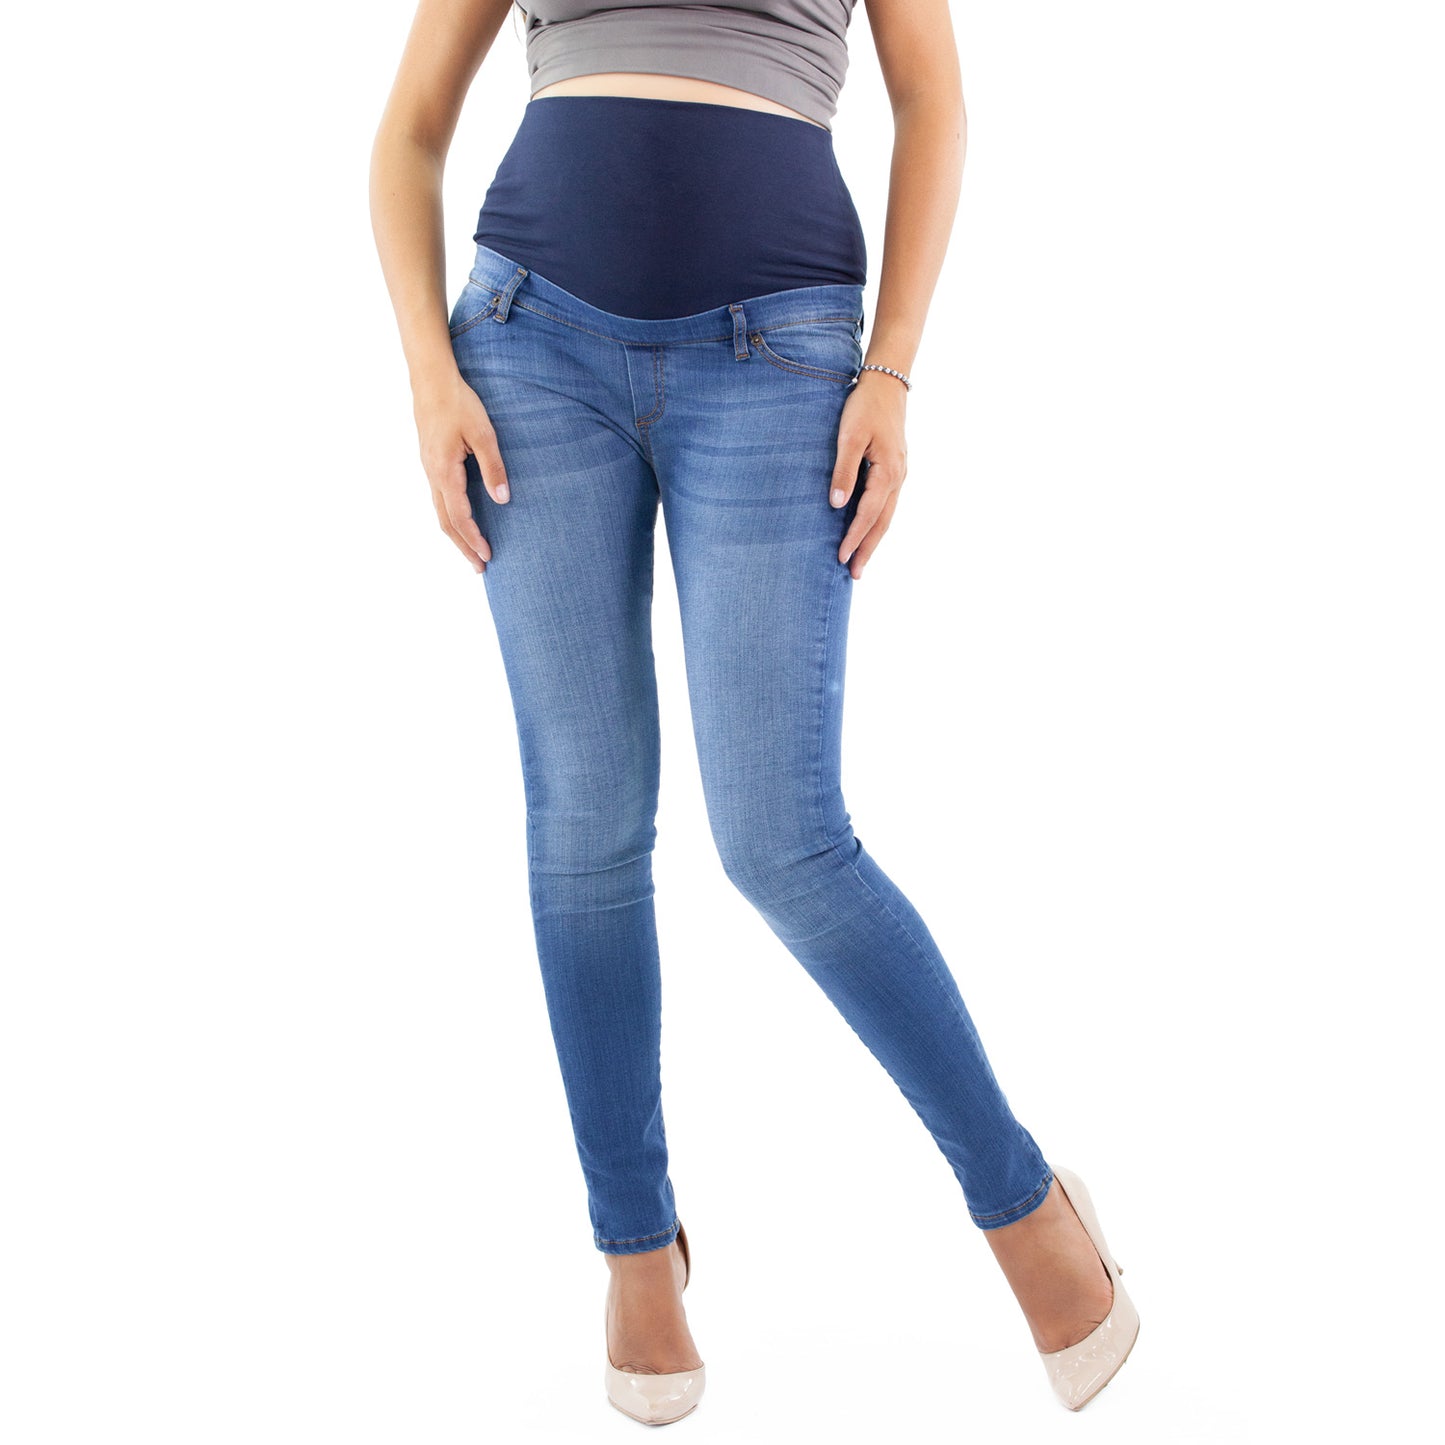 Milano - Deluxe Chiaro maternity jeans - Slim fit - Light blue denim